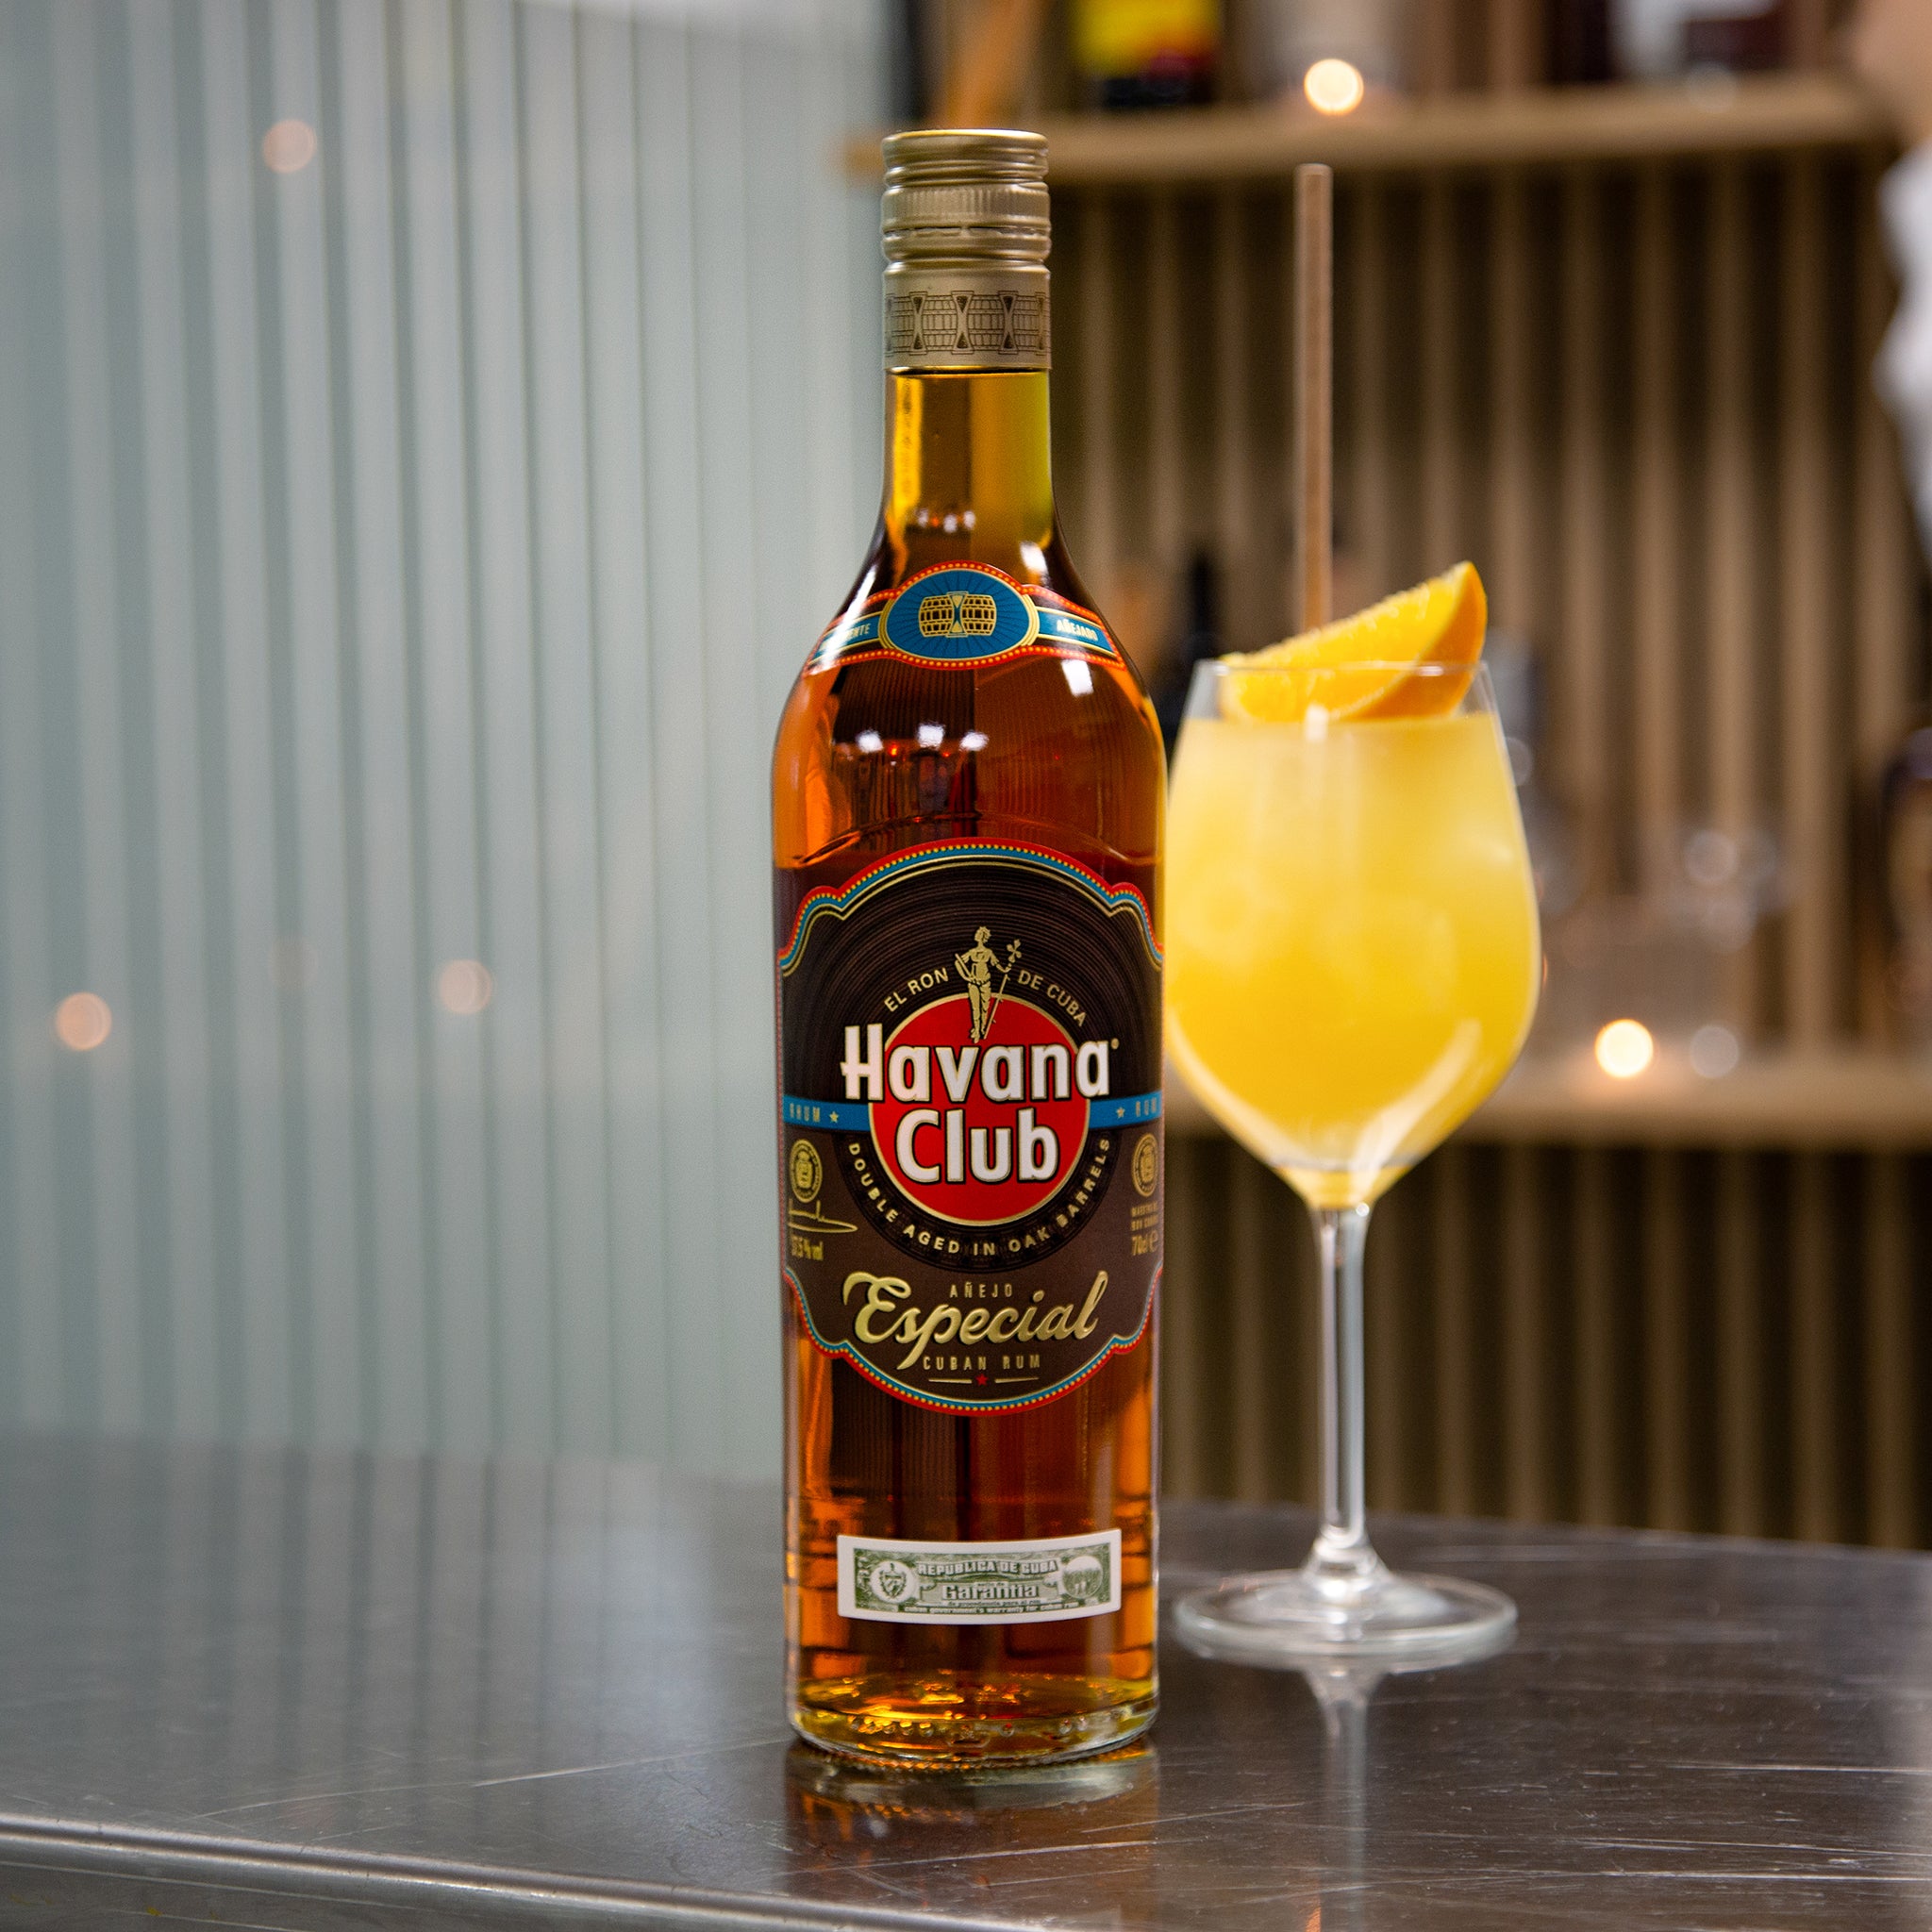 Havana Club Especial rom